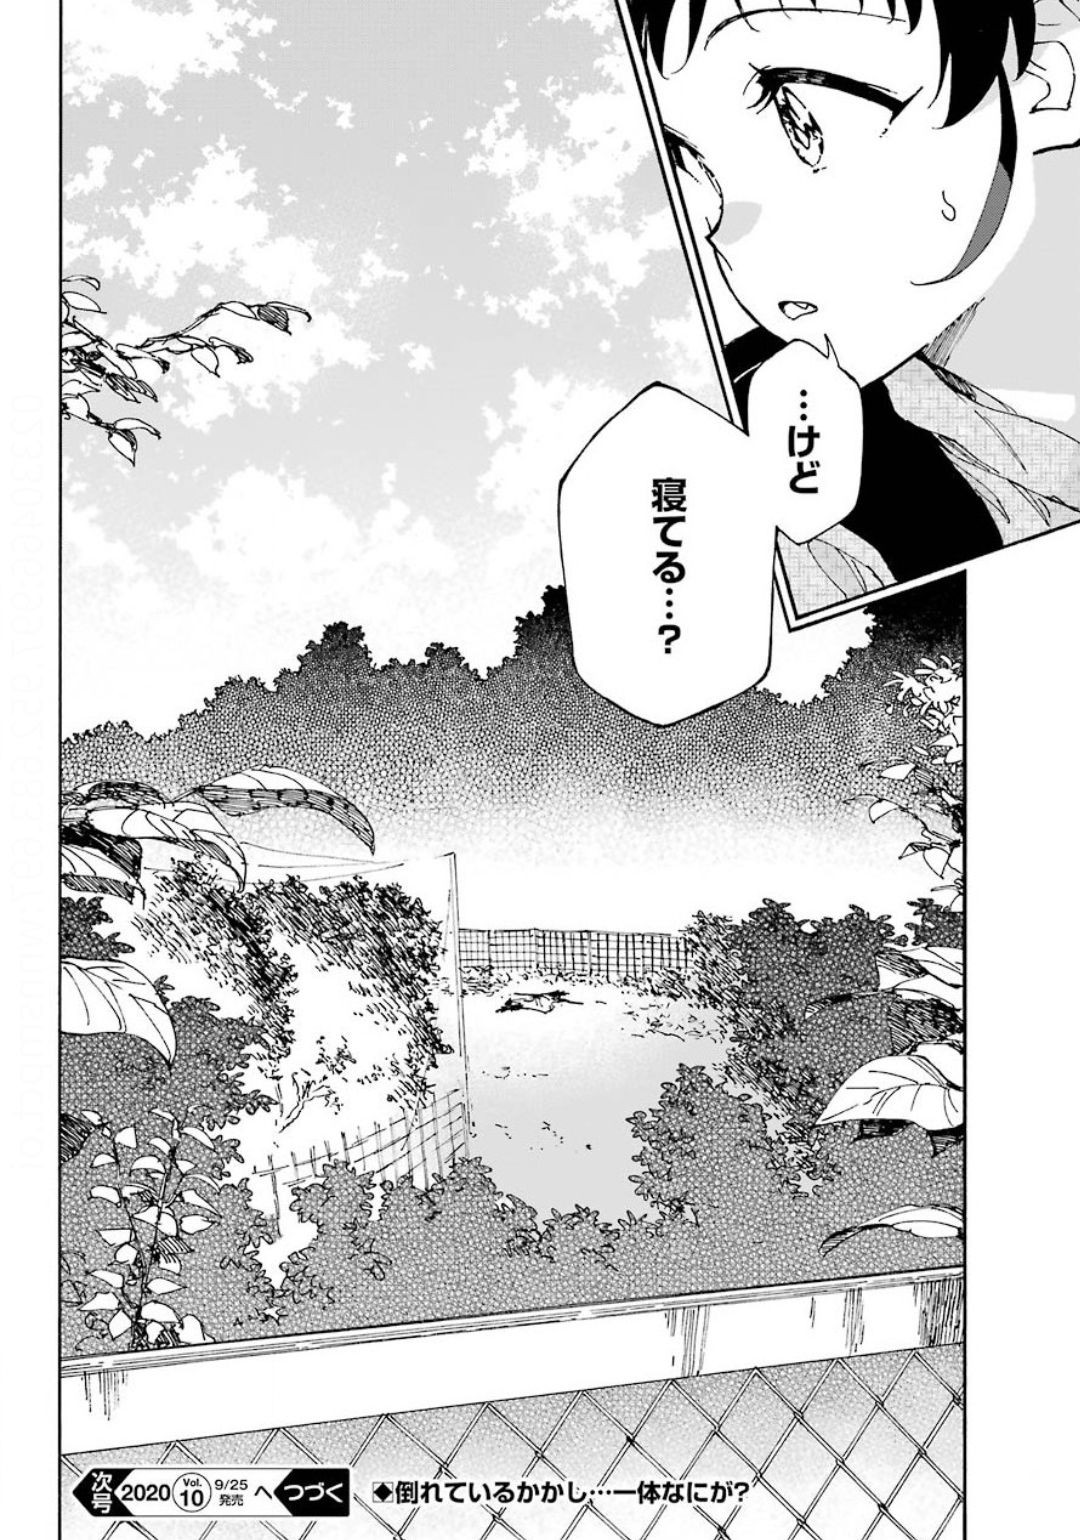 Hotomeku-kakashi - Chapter 06-1 - Page 16